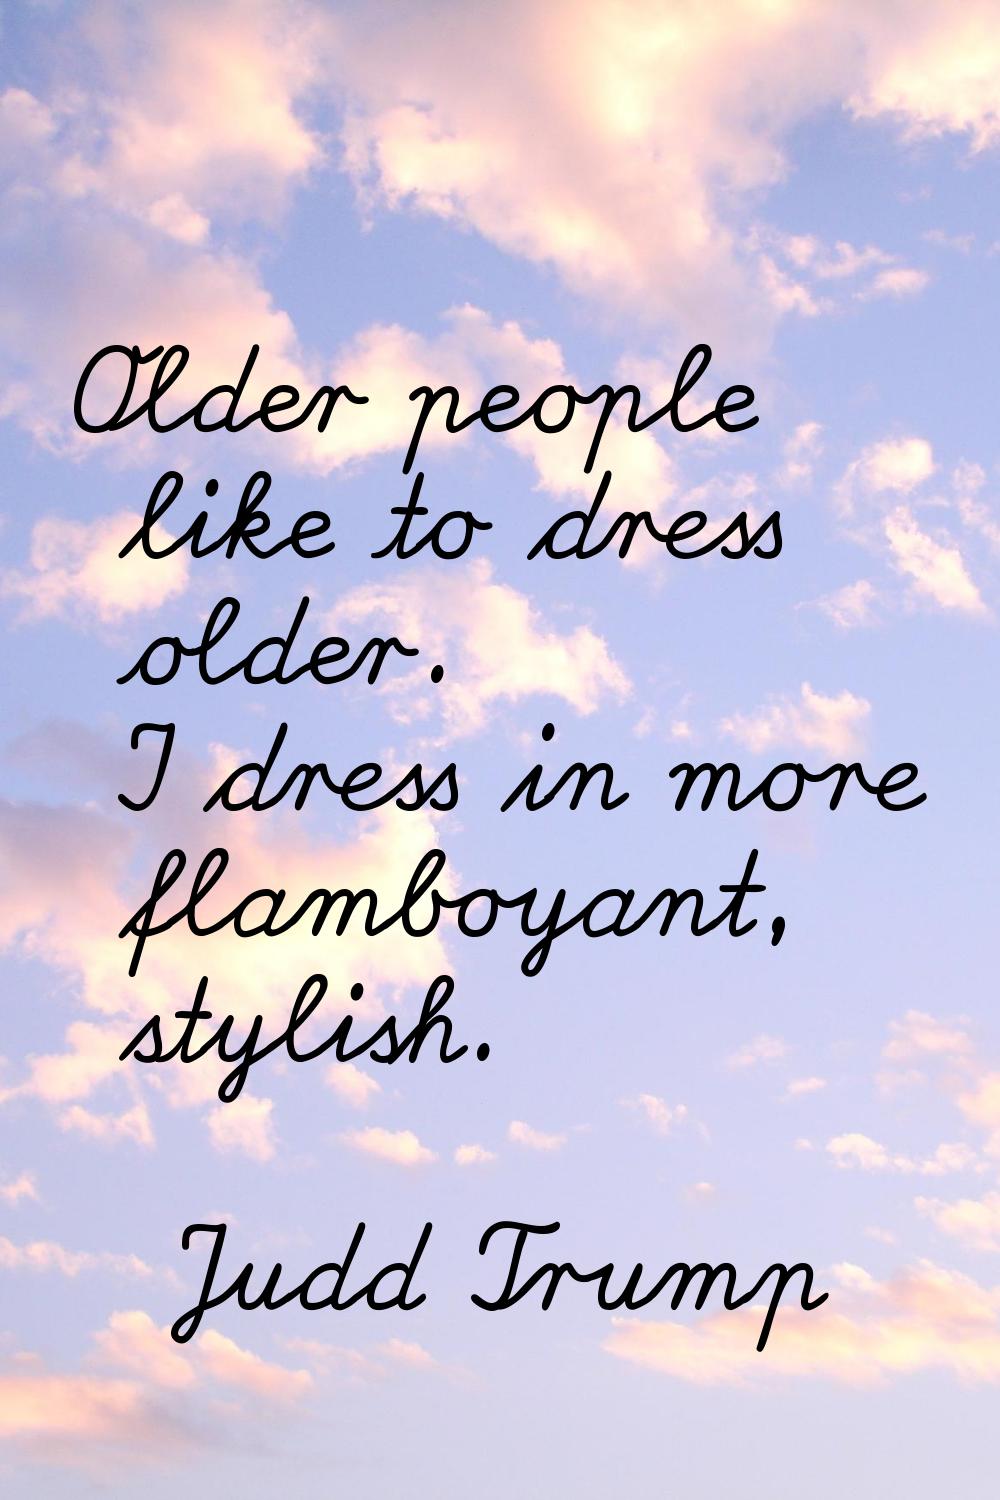 Older people like to dress older. I dress in more flamboyant, stylish.